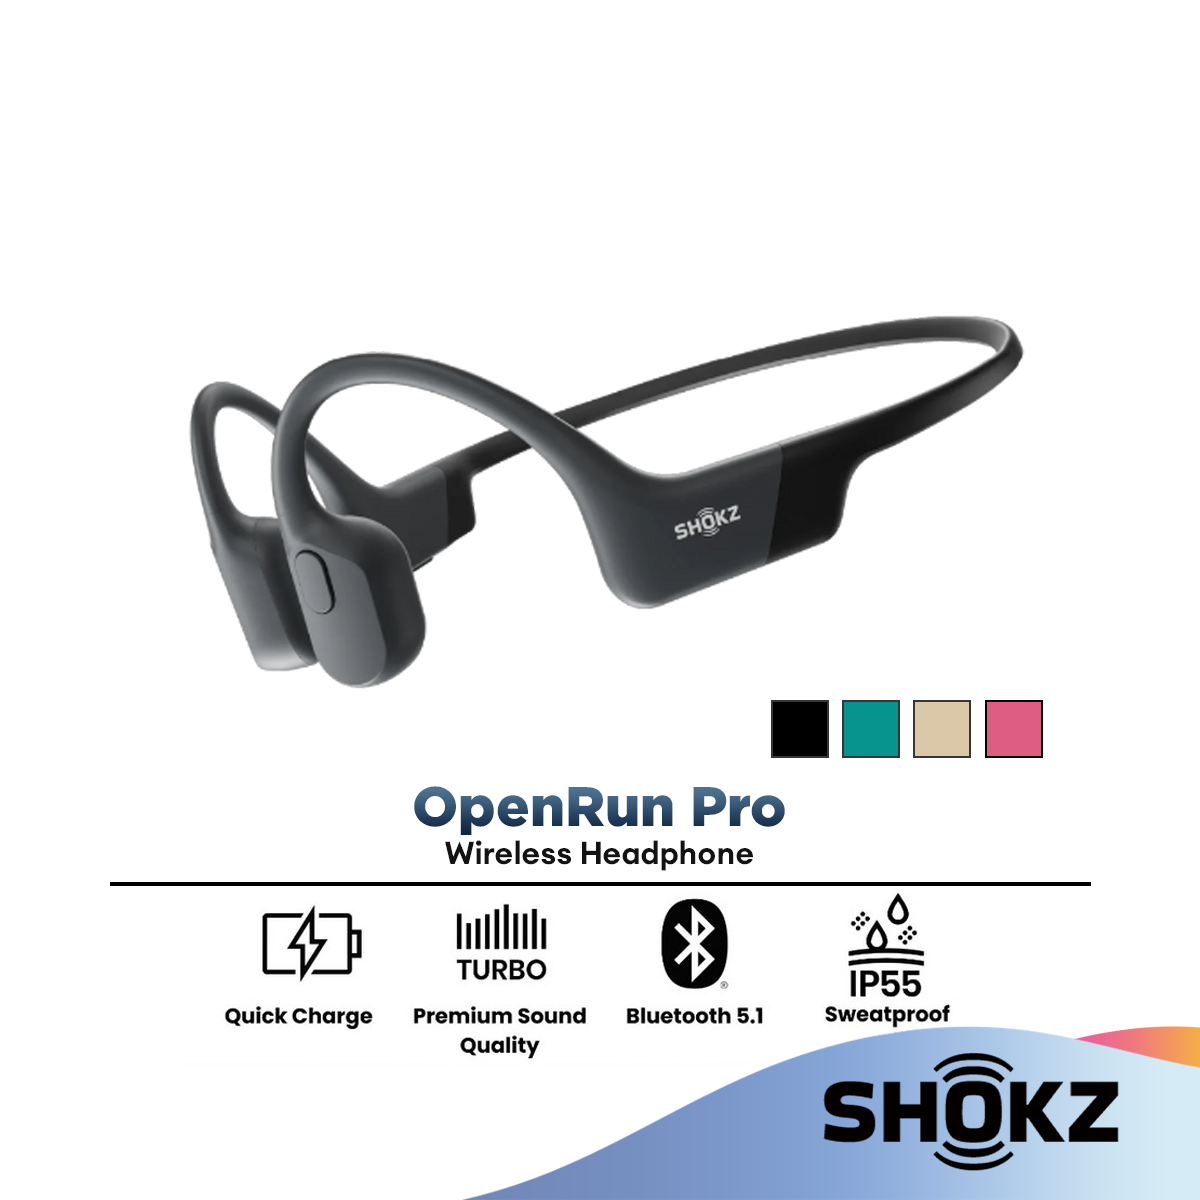 Save $40 On These Unique Shokz OpenRun Pro Bone Conduction